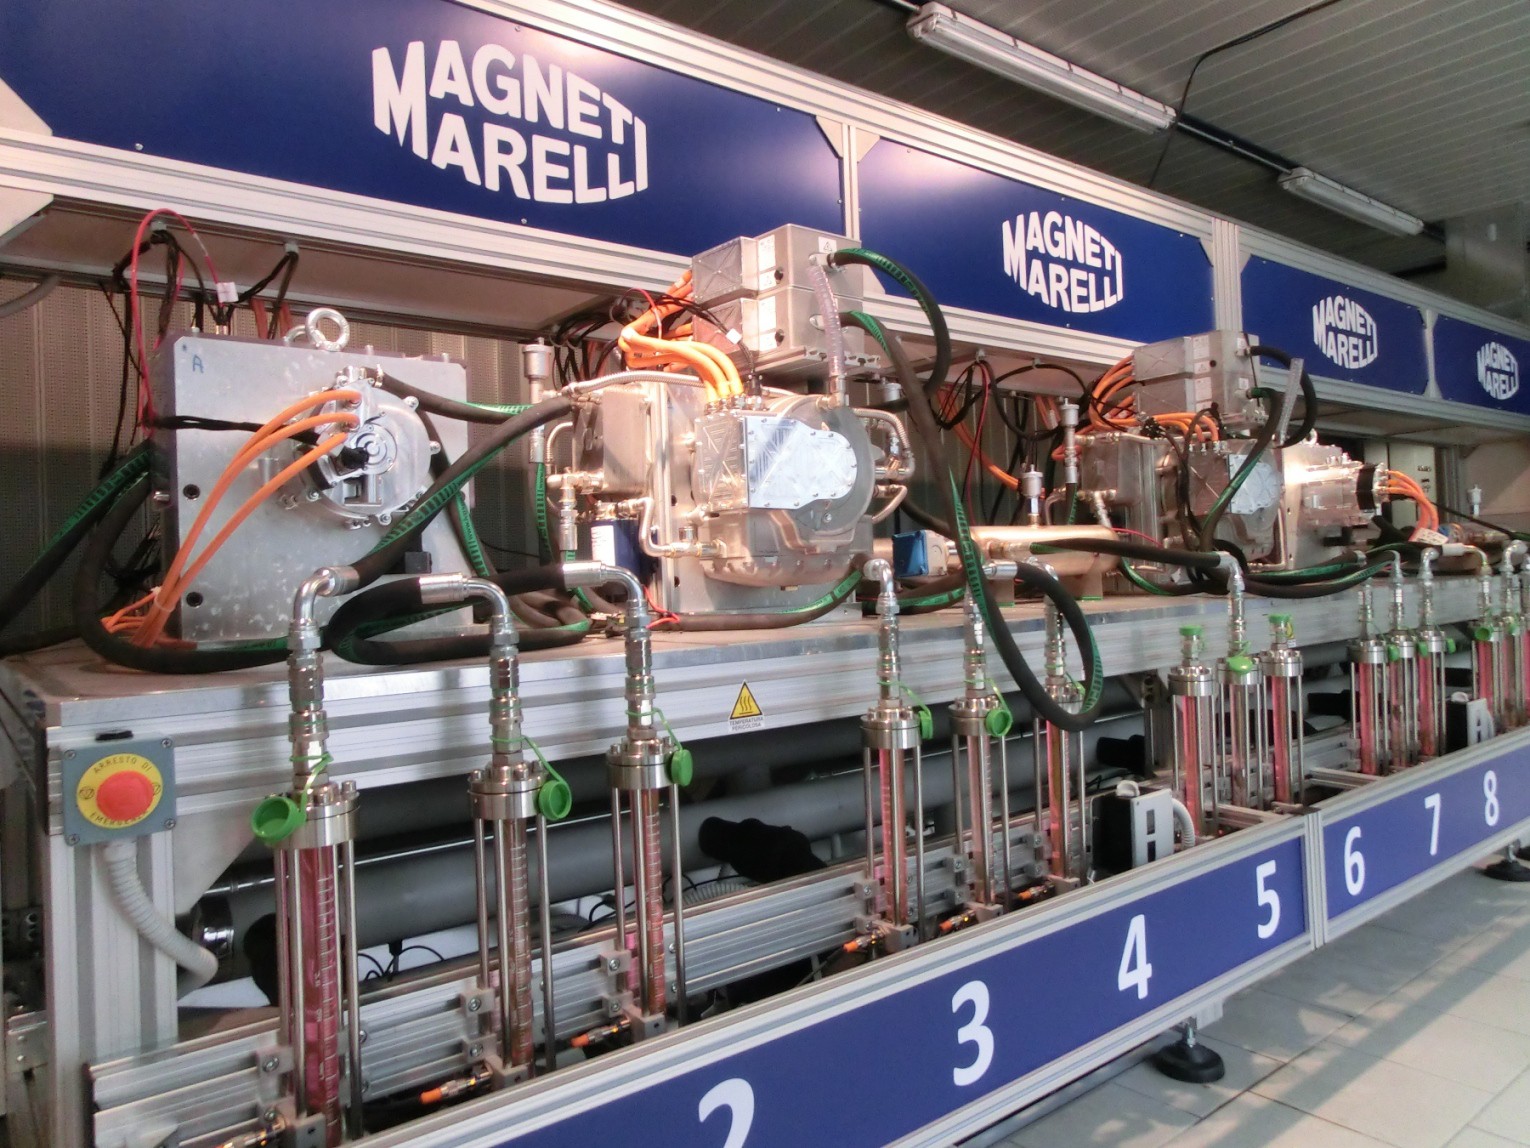 CEVA Logistics abre un nuevo centro para Magneti Marelli